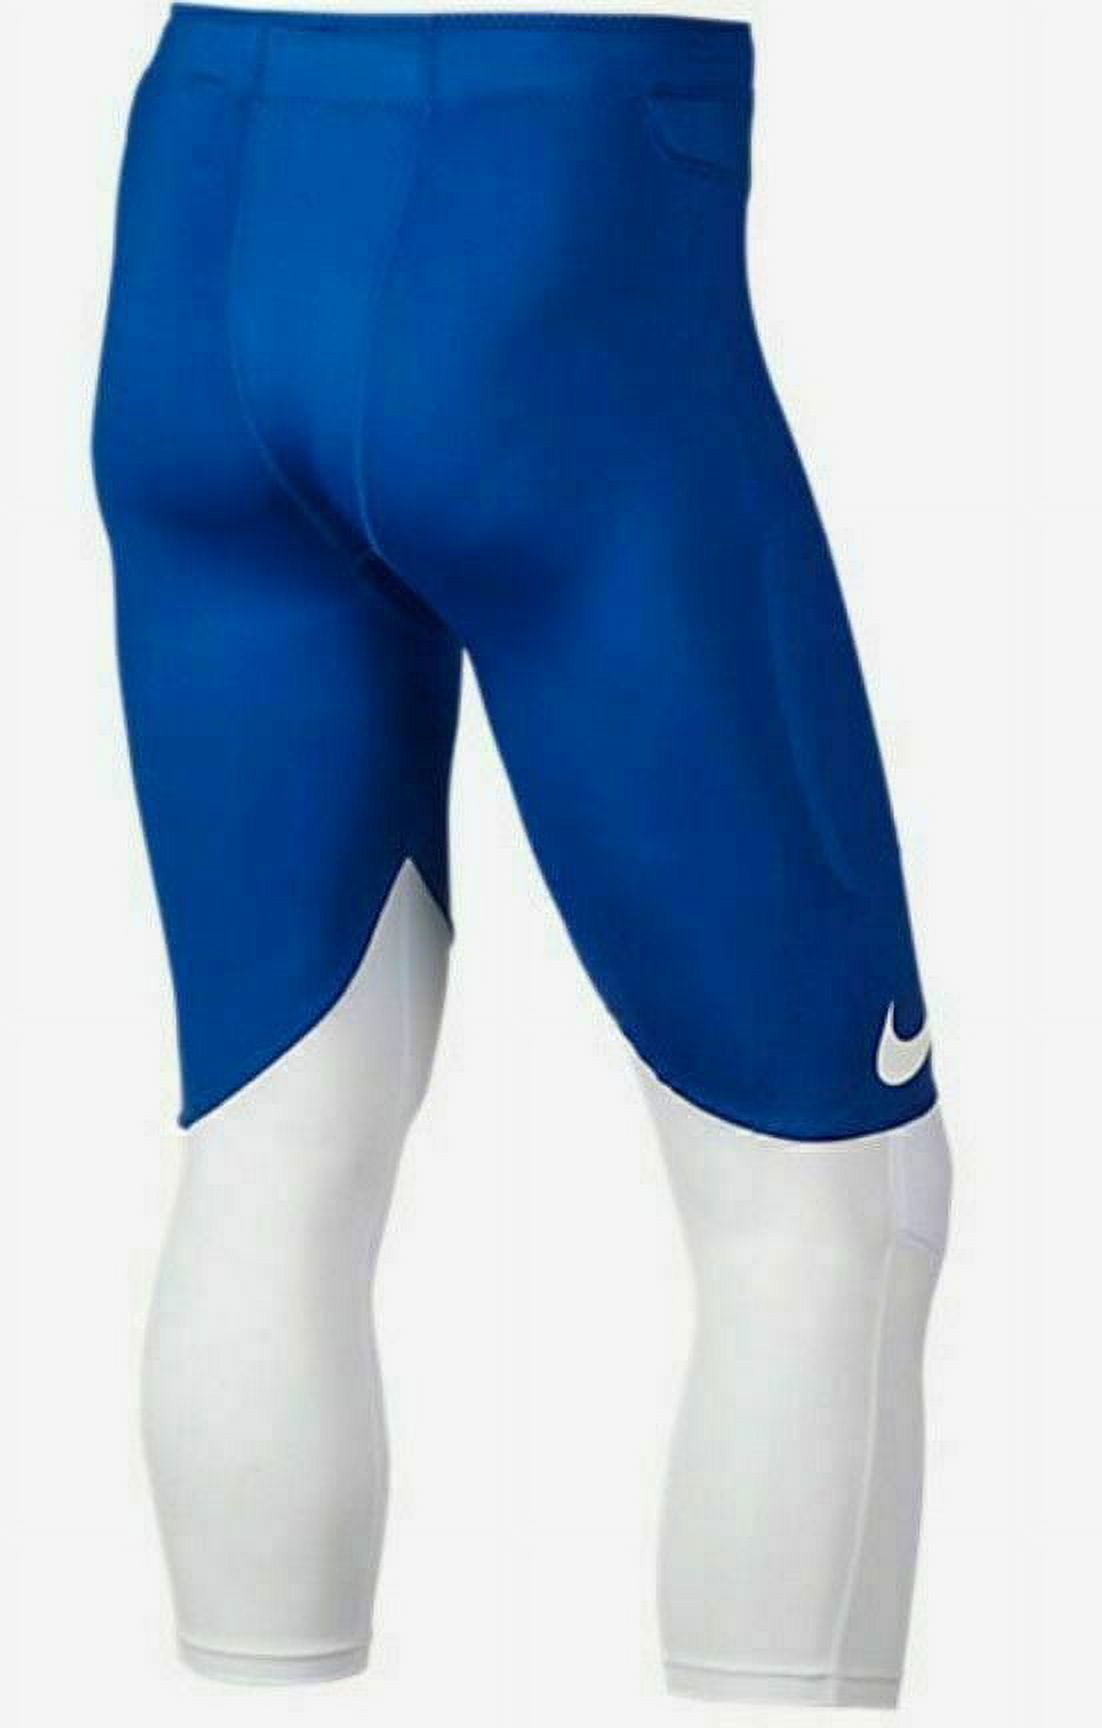 NEW Nike Vapor Speed Men's 3/4 Football Tights 835340-480 Blue 2XL